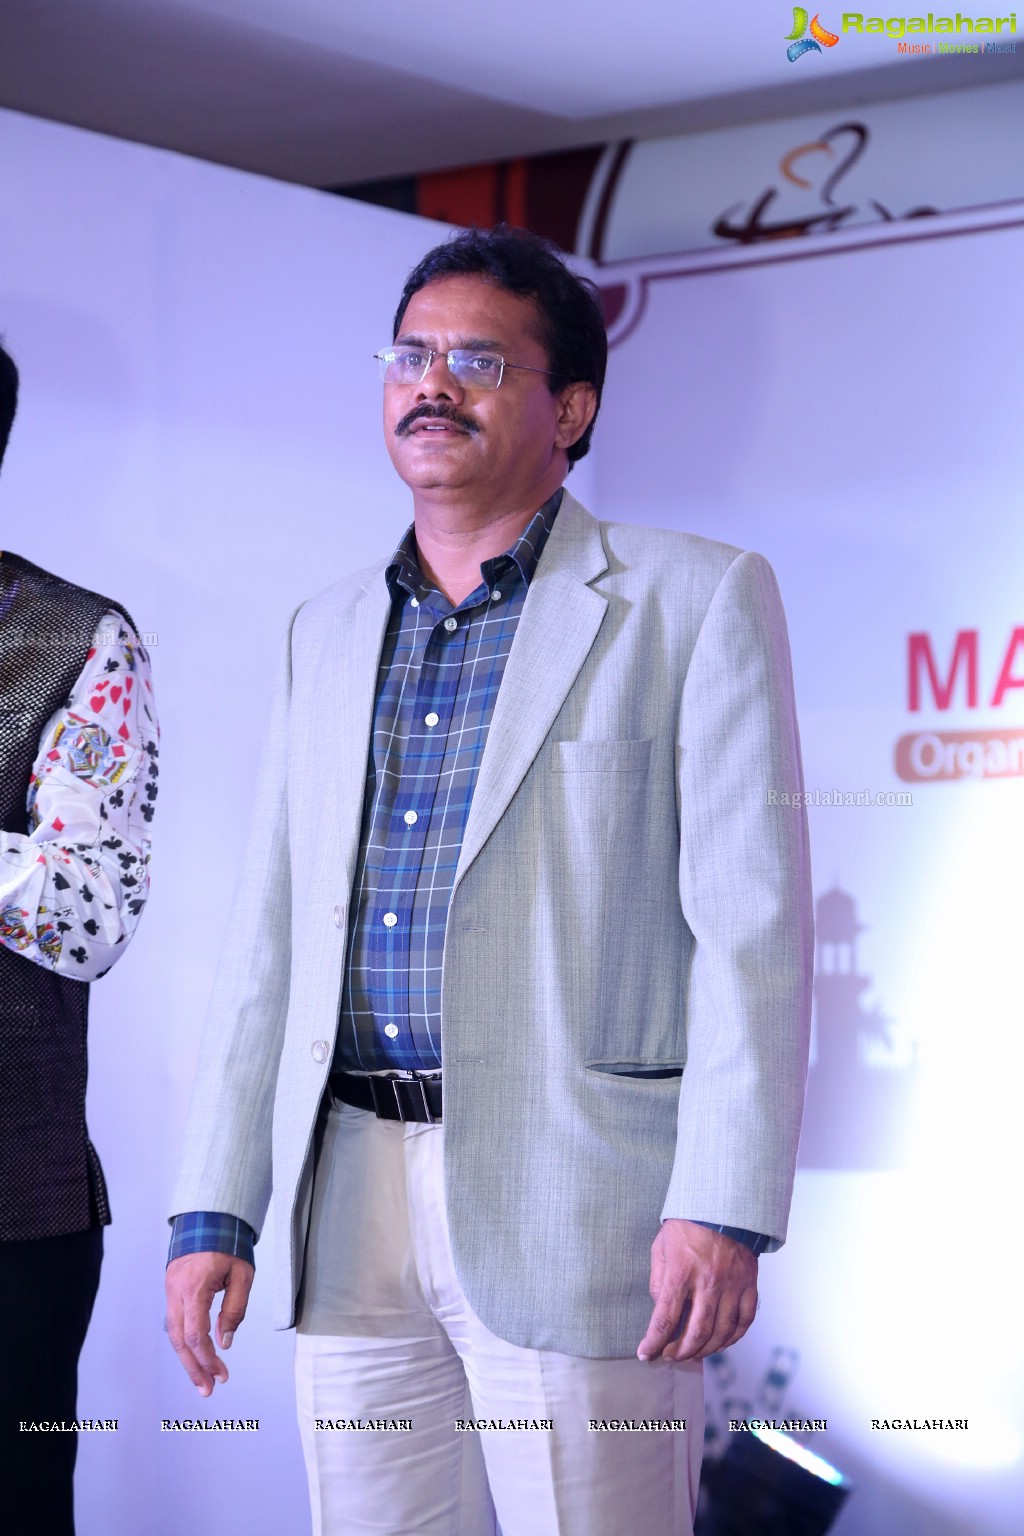 Deccan Magic Fest 2017 at Manjeera Mall